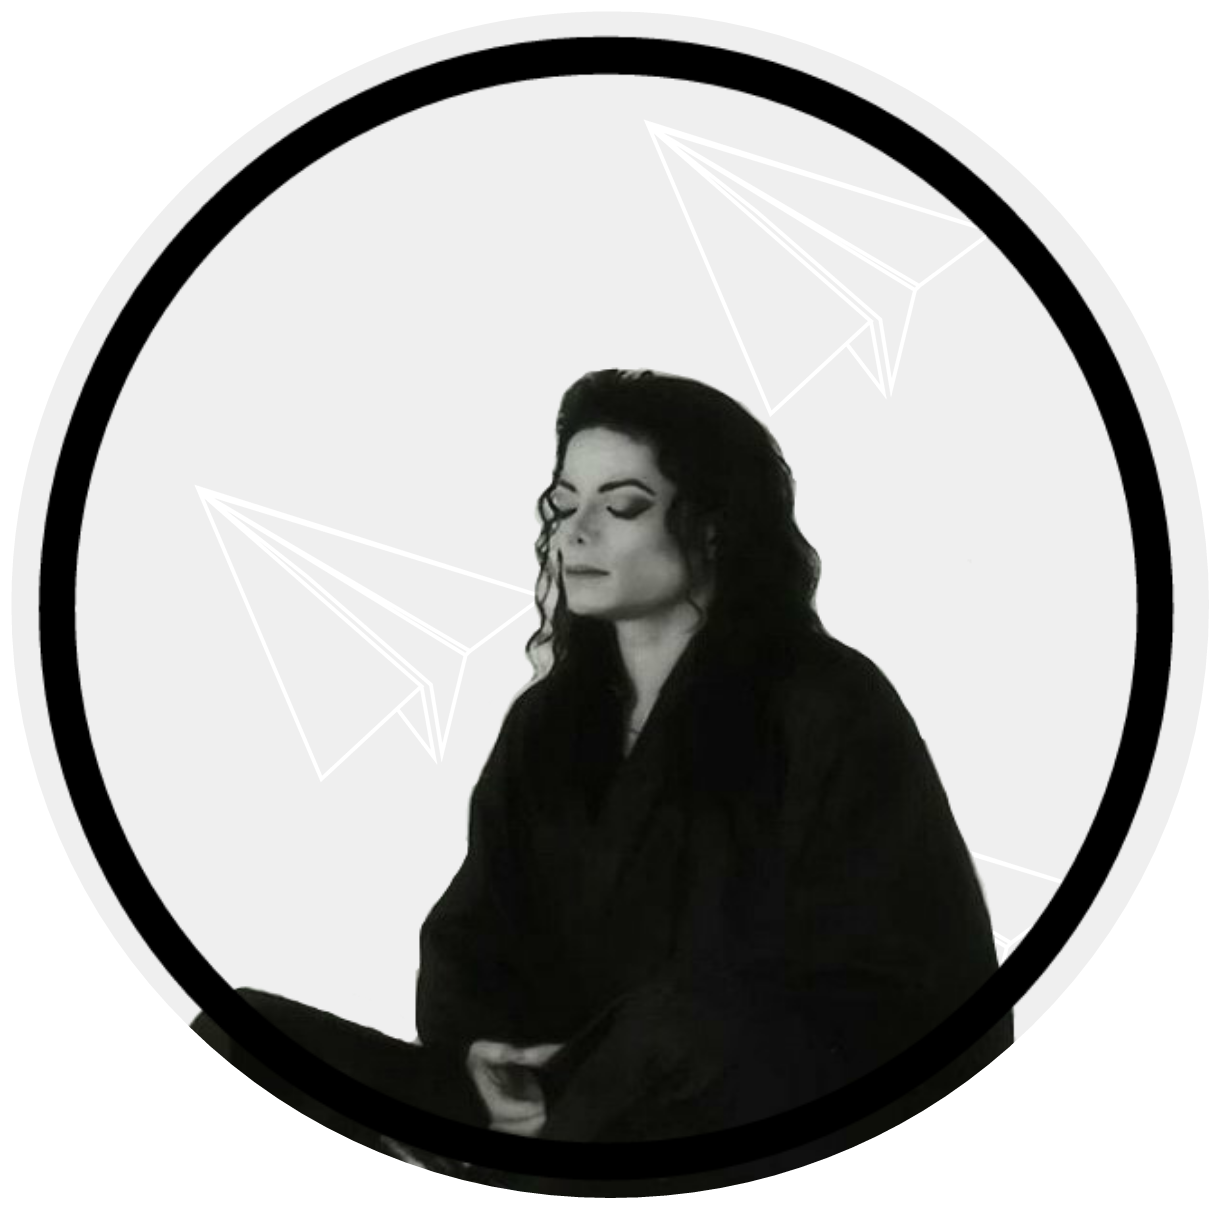 Michael Jackson Contemplative Pose PNG image